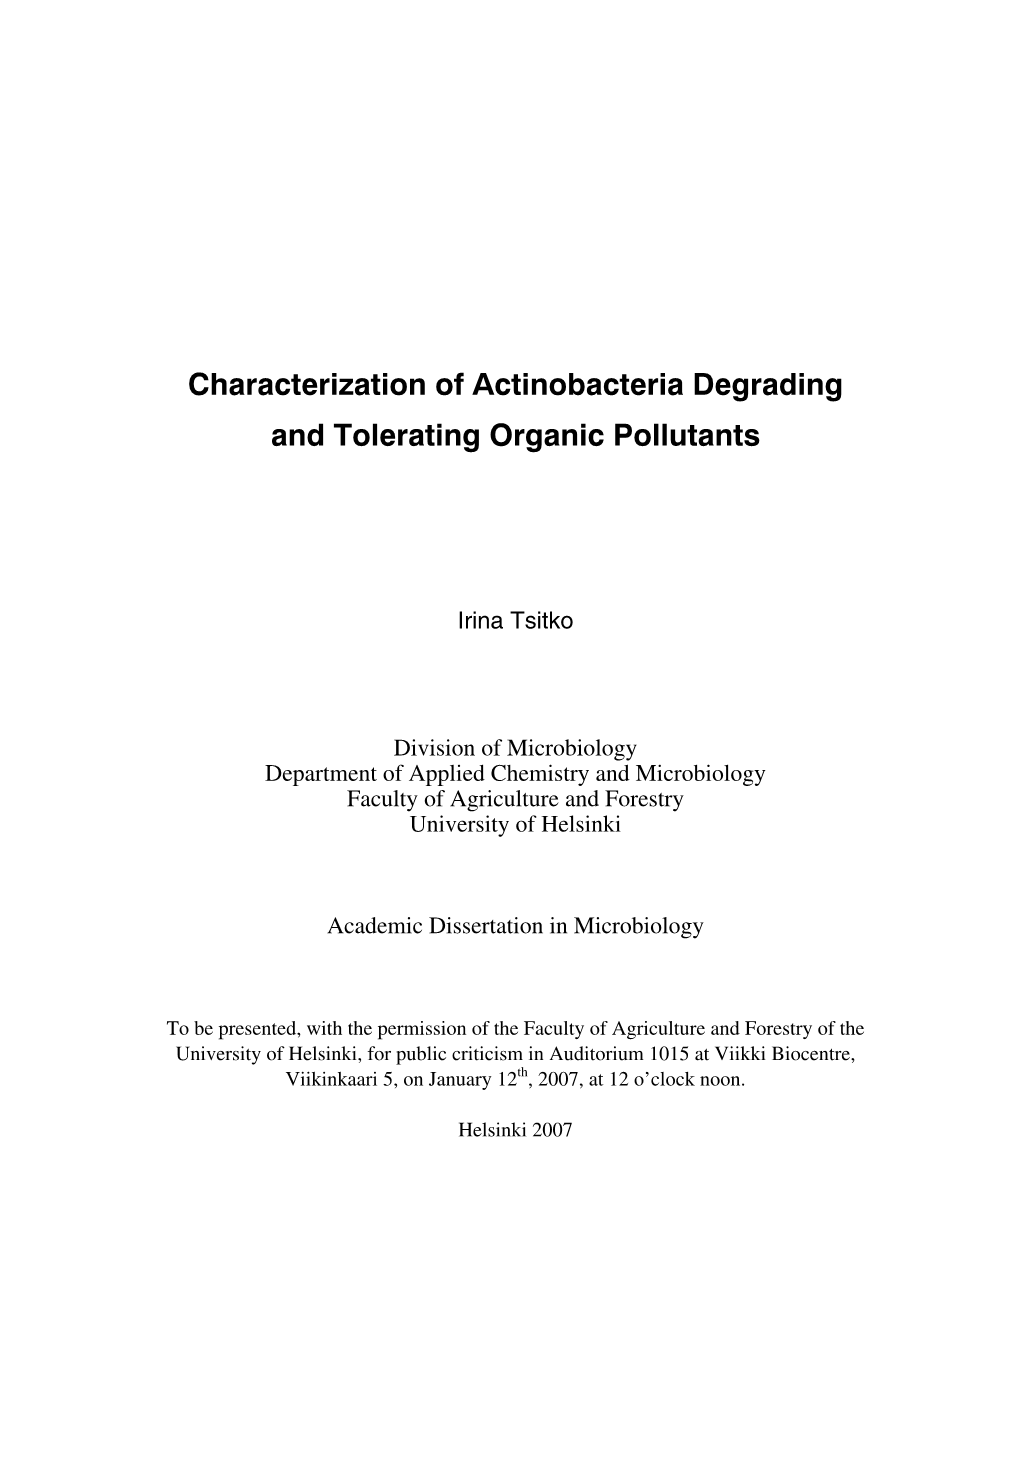 Characterization of Actinobacteria Degrading and Tolerating Organic Pollutants and Tolerating Organic Pollutants